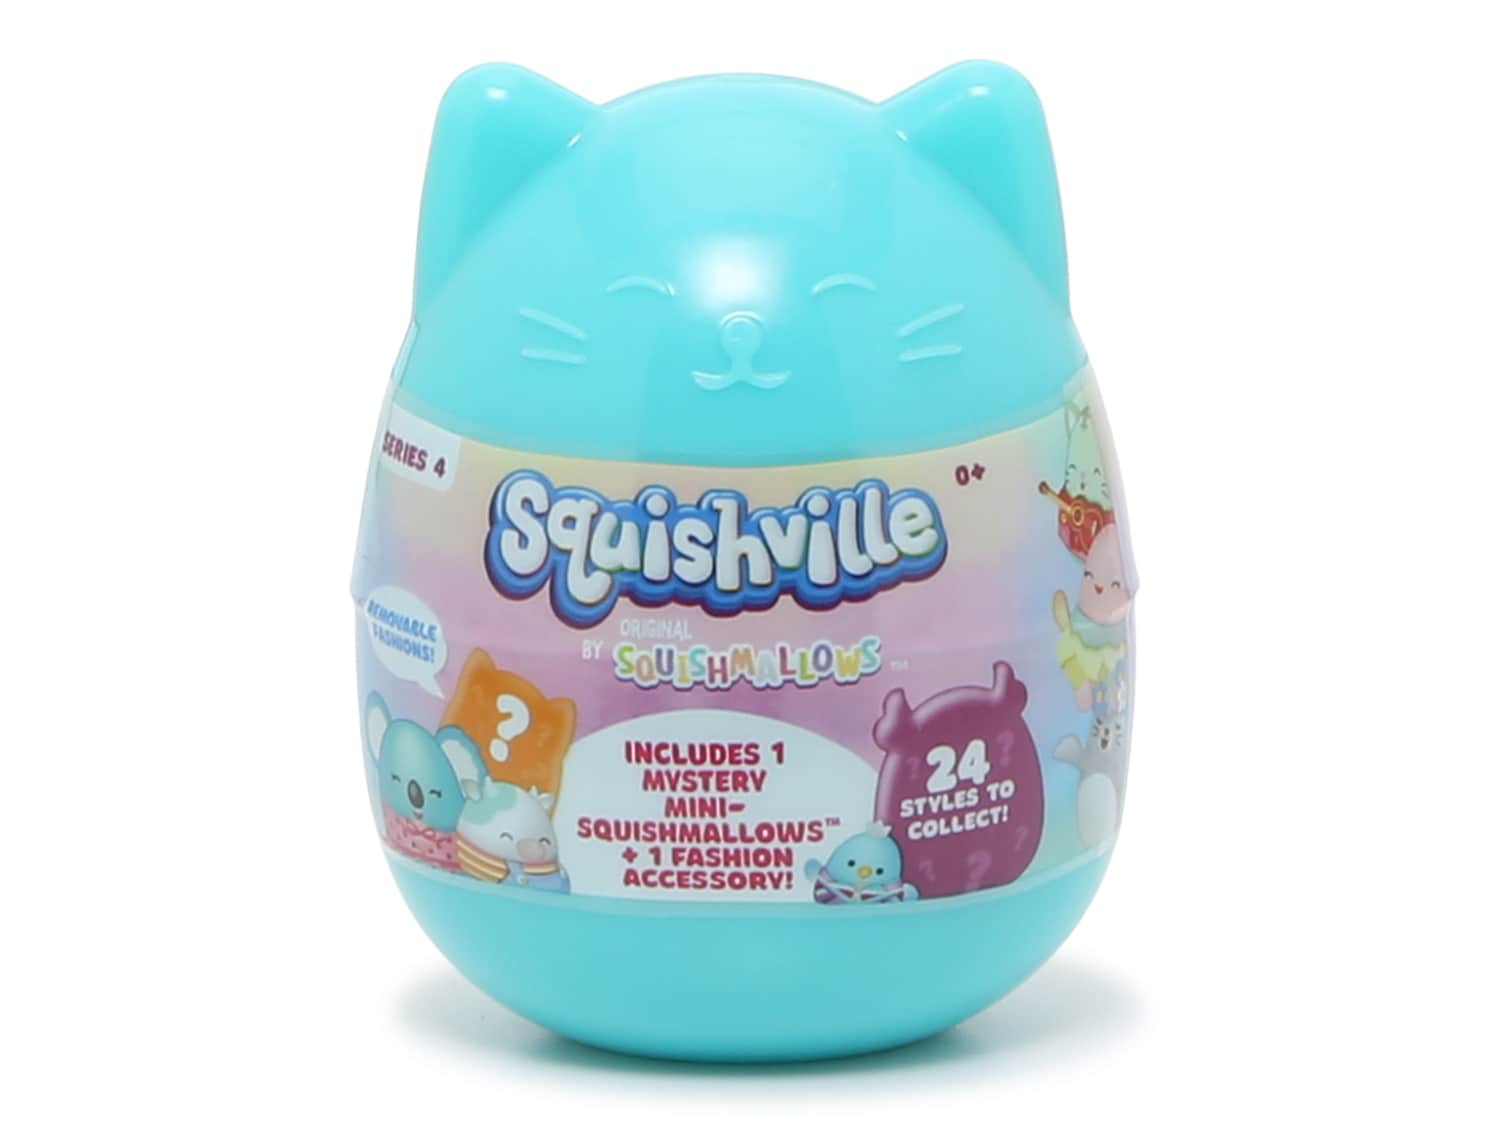 Original Squishmallows Squishville Mystery Mini Plush